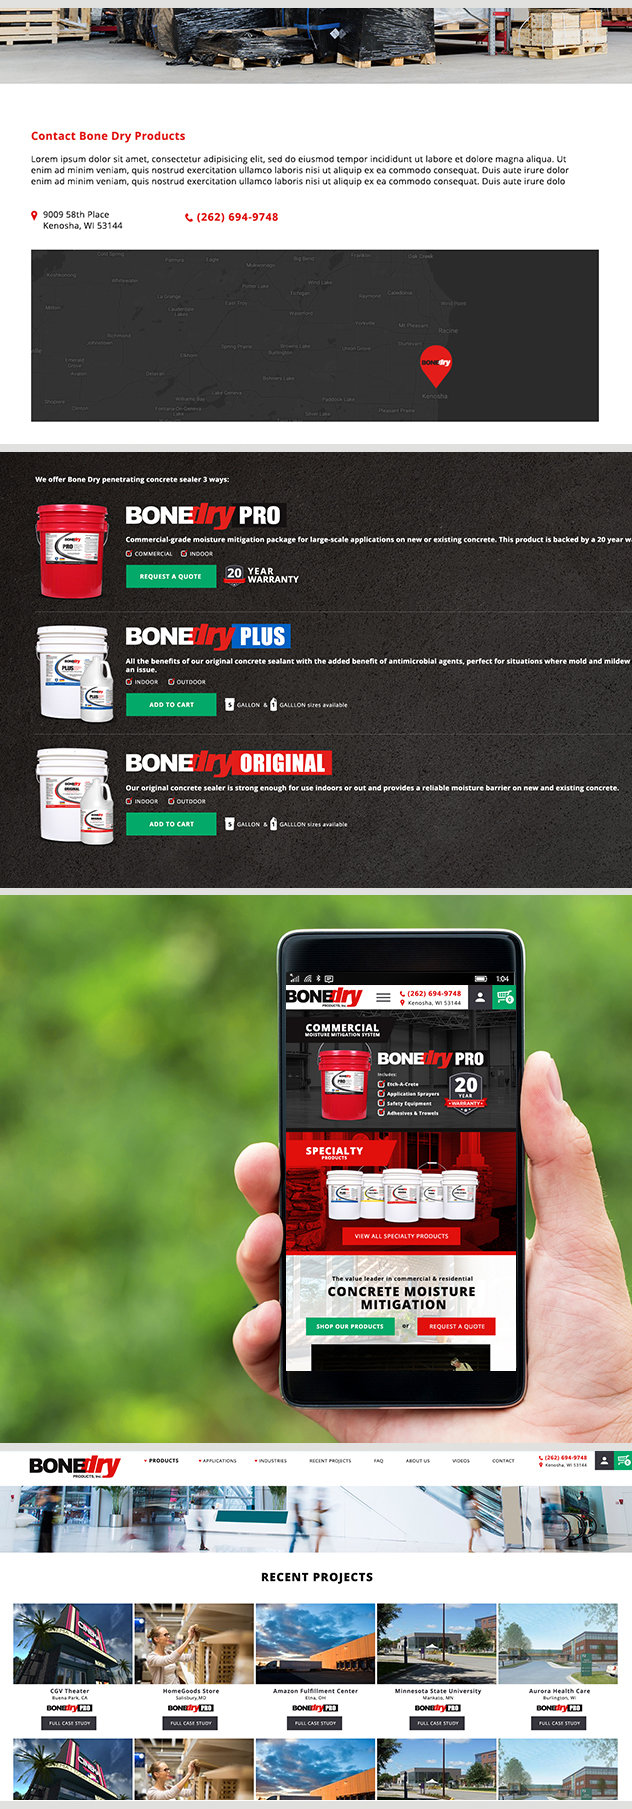 Milwaukee web marketing for Bone Dry Products 